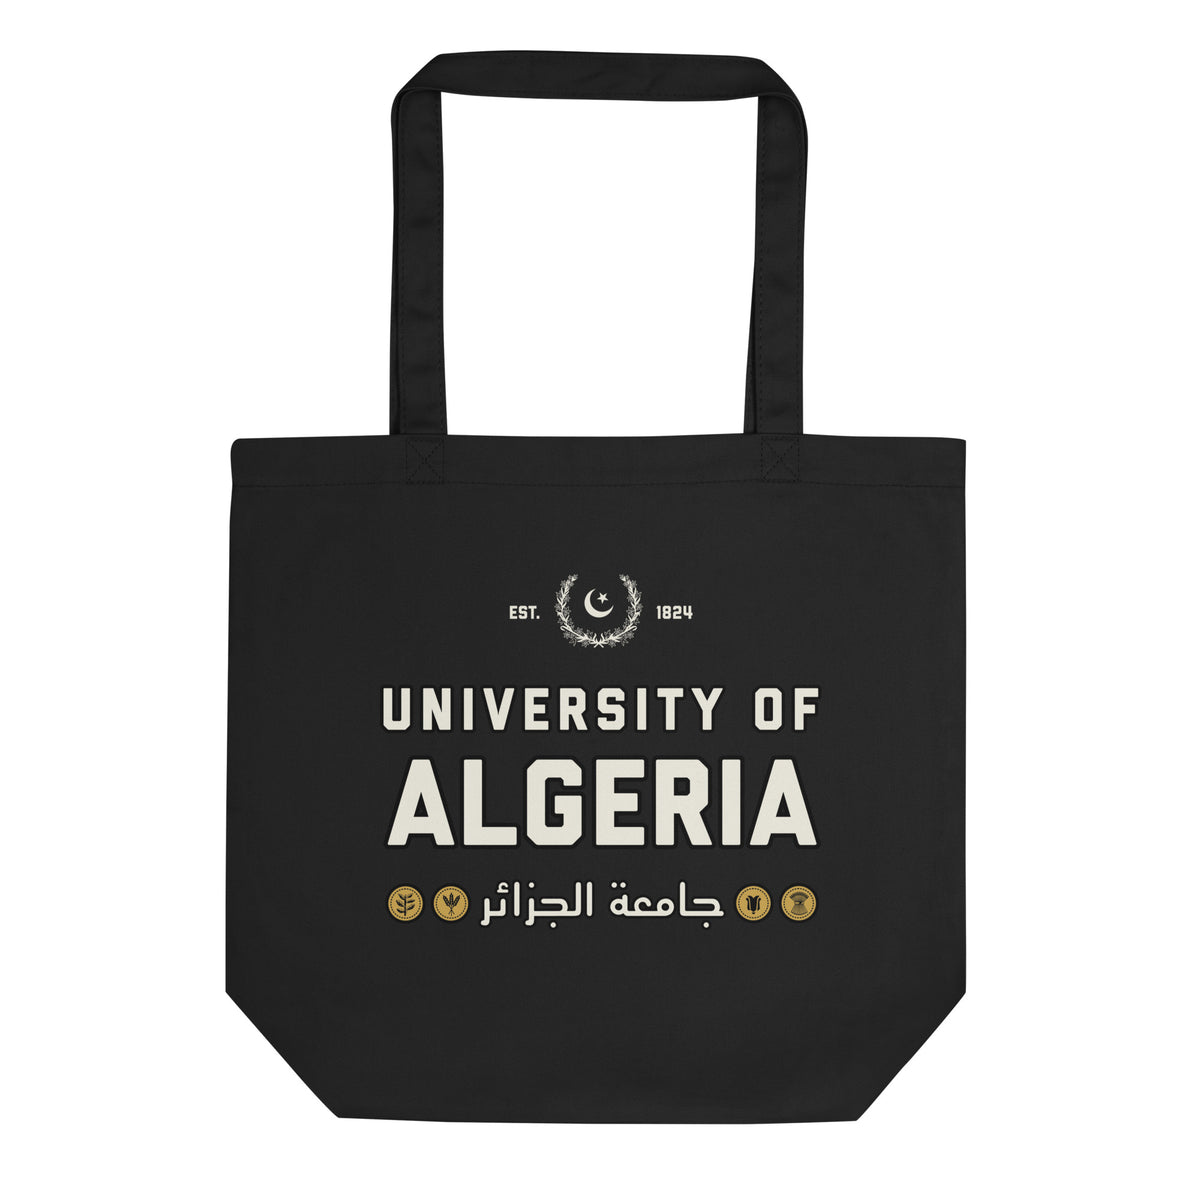 University of Algeria - Tote